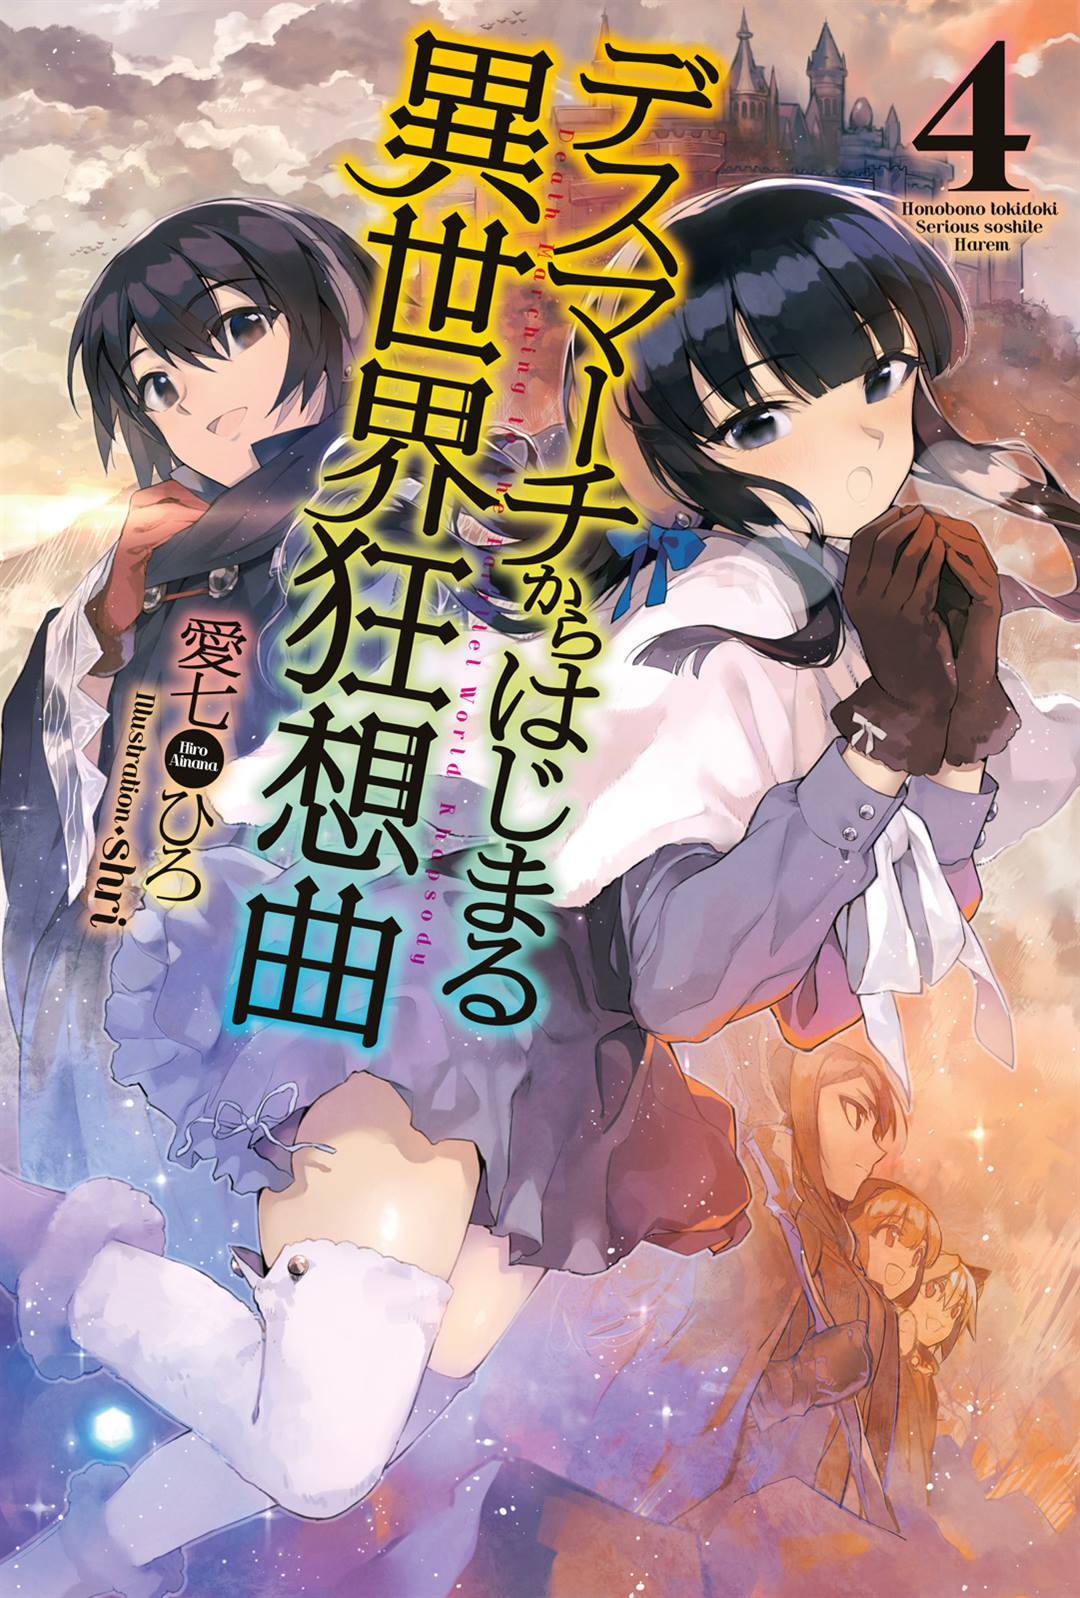 Drama CD] Death March Kara Hajimaru Isekai Kyousoukyoku - Anime X